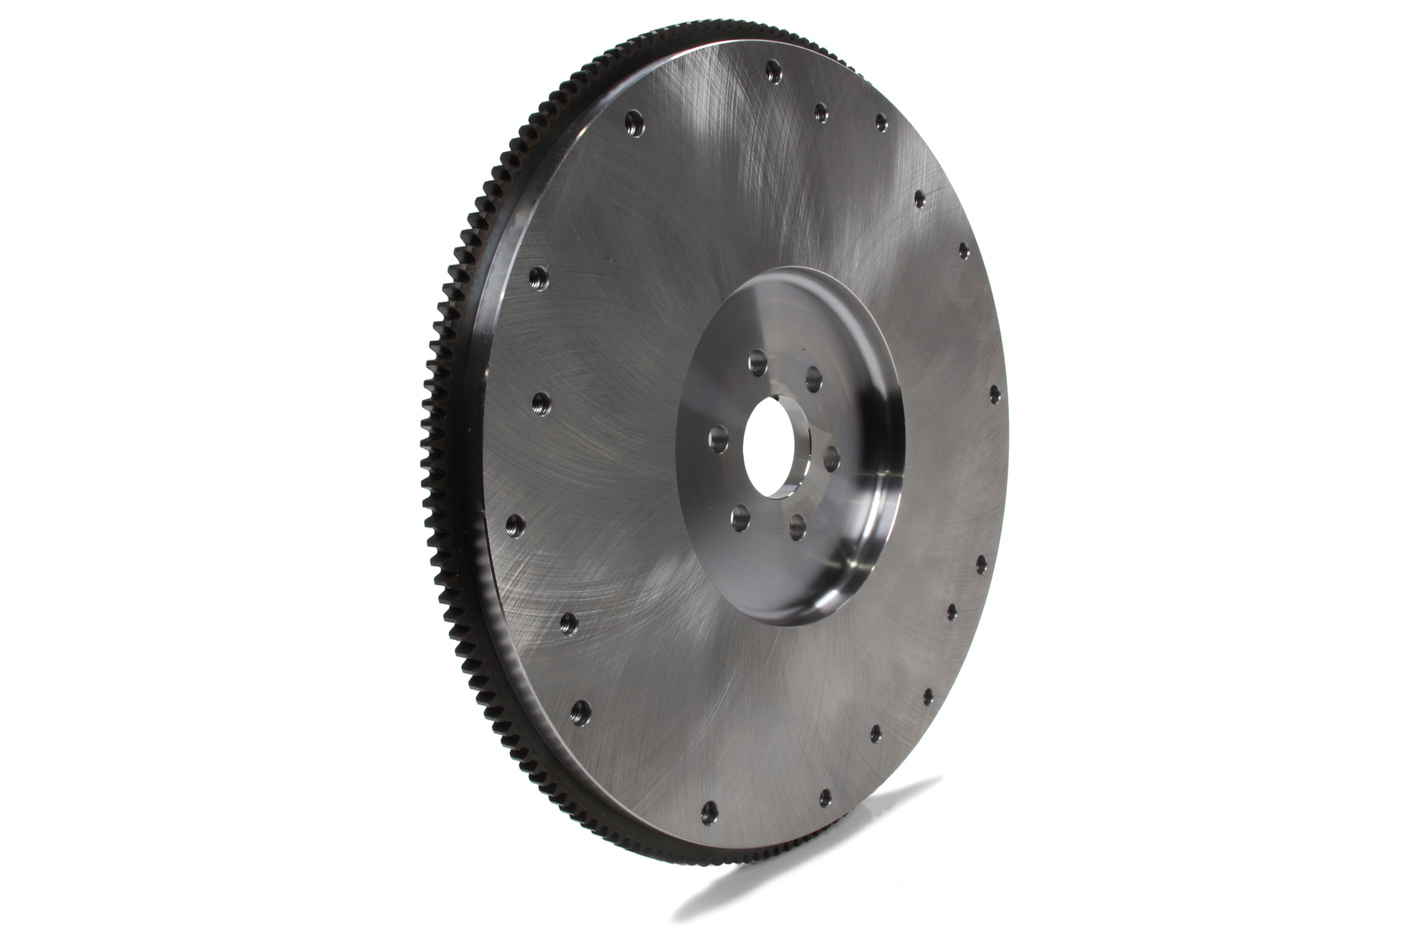 Ram Clutch 1505LW - Flywheel, 164 Tooth, 25 lb, SFI 1.1, Steel, Natural, External Balance, Small Block Ford, Each